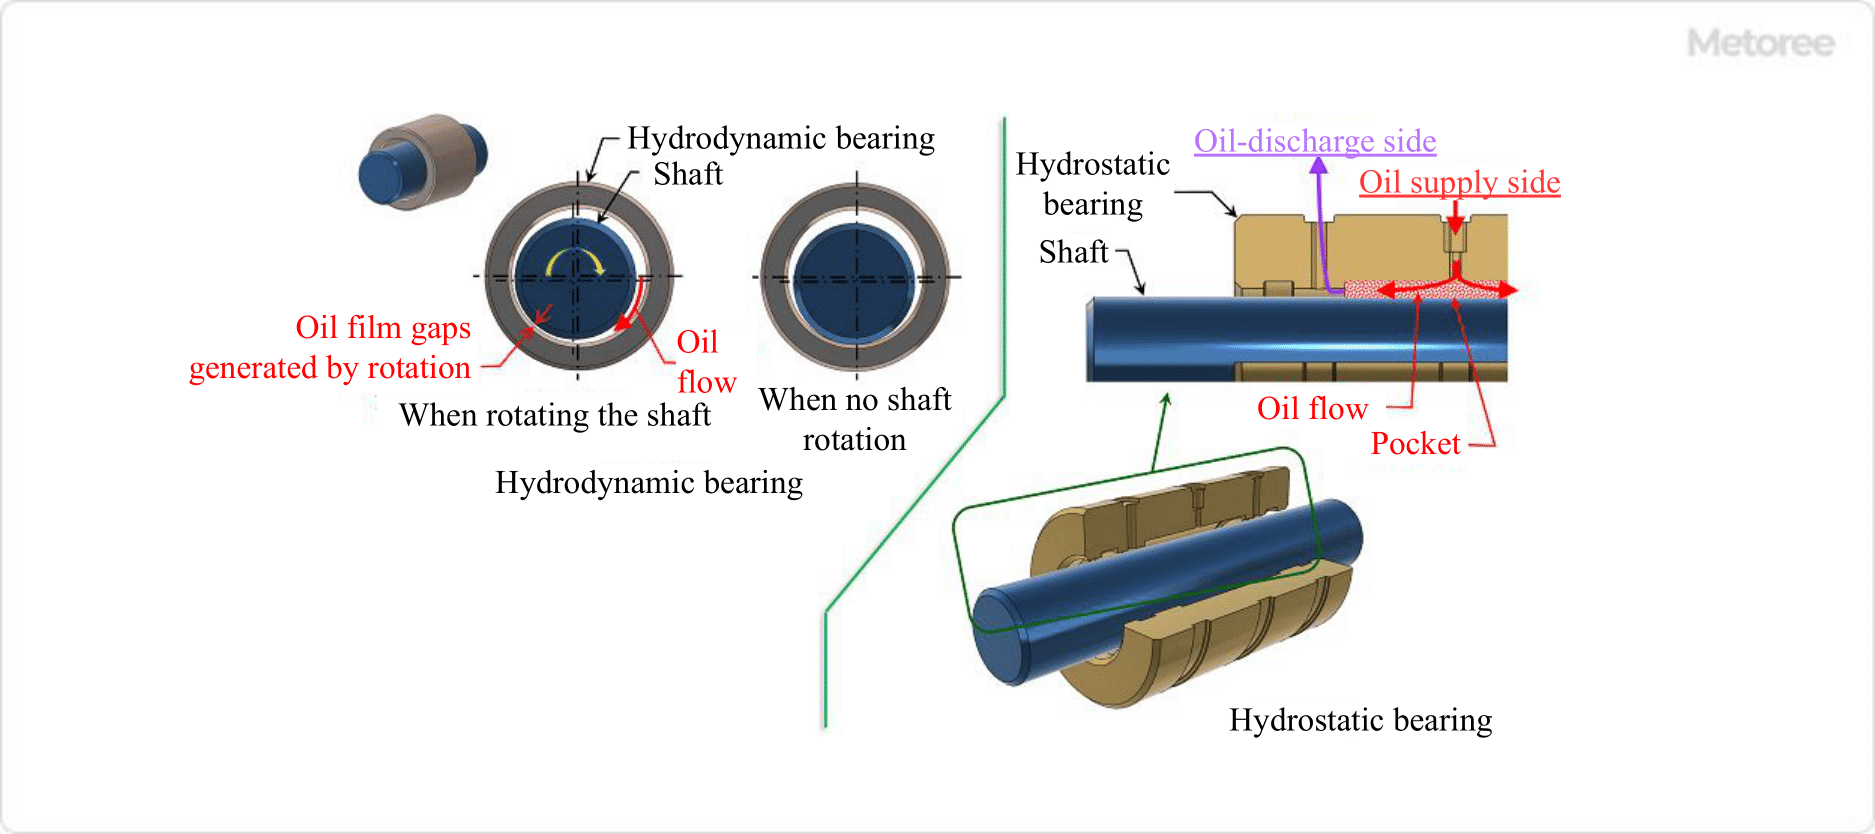 Figure 2. Hydrodynamic and hydrostatic bearings